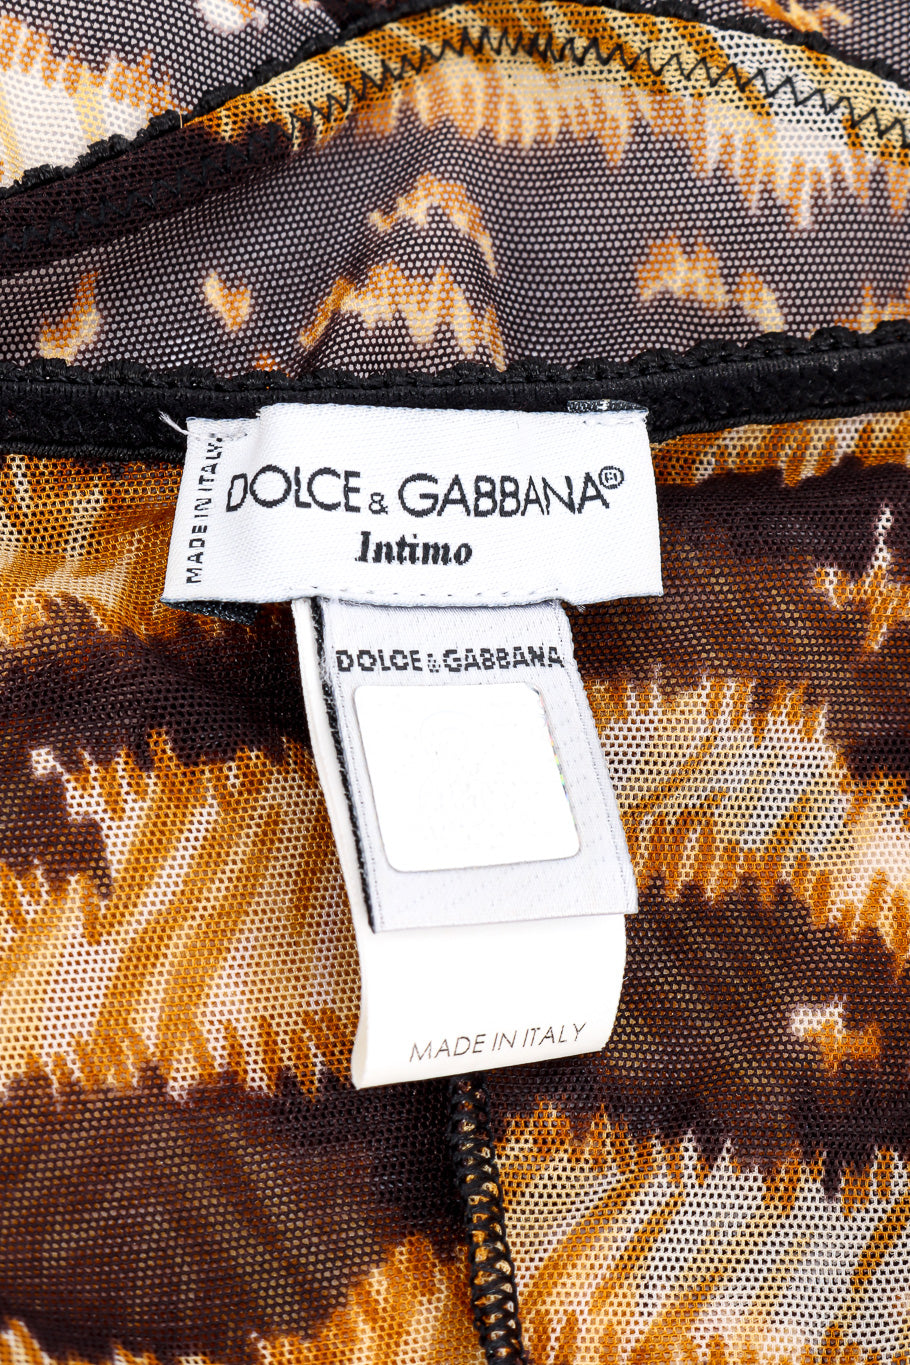 Dolce & Gabbana animal print chemise designer label @recessla